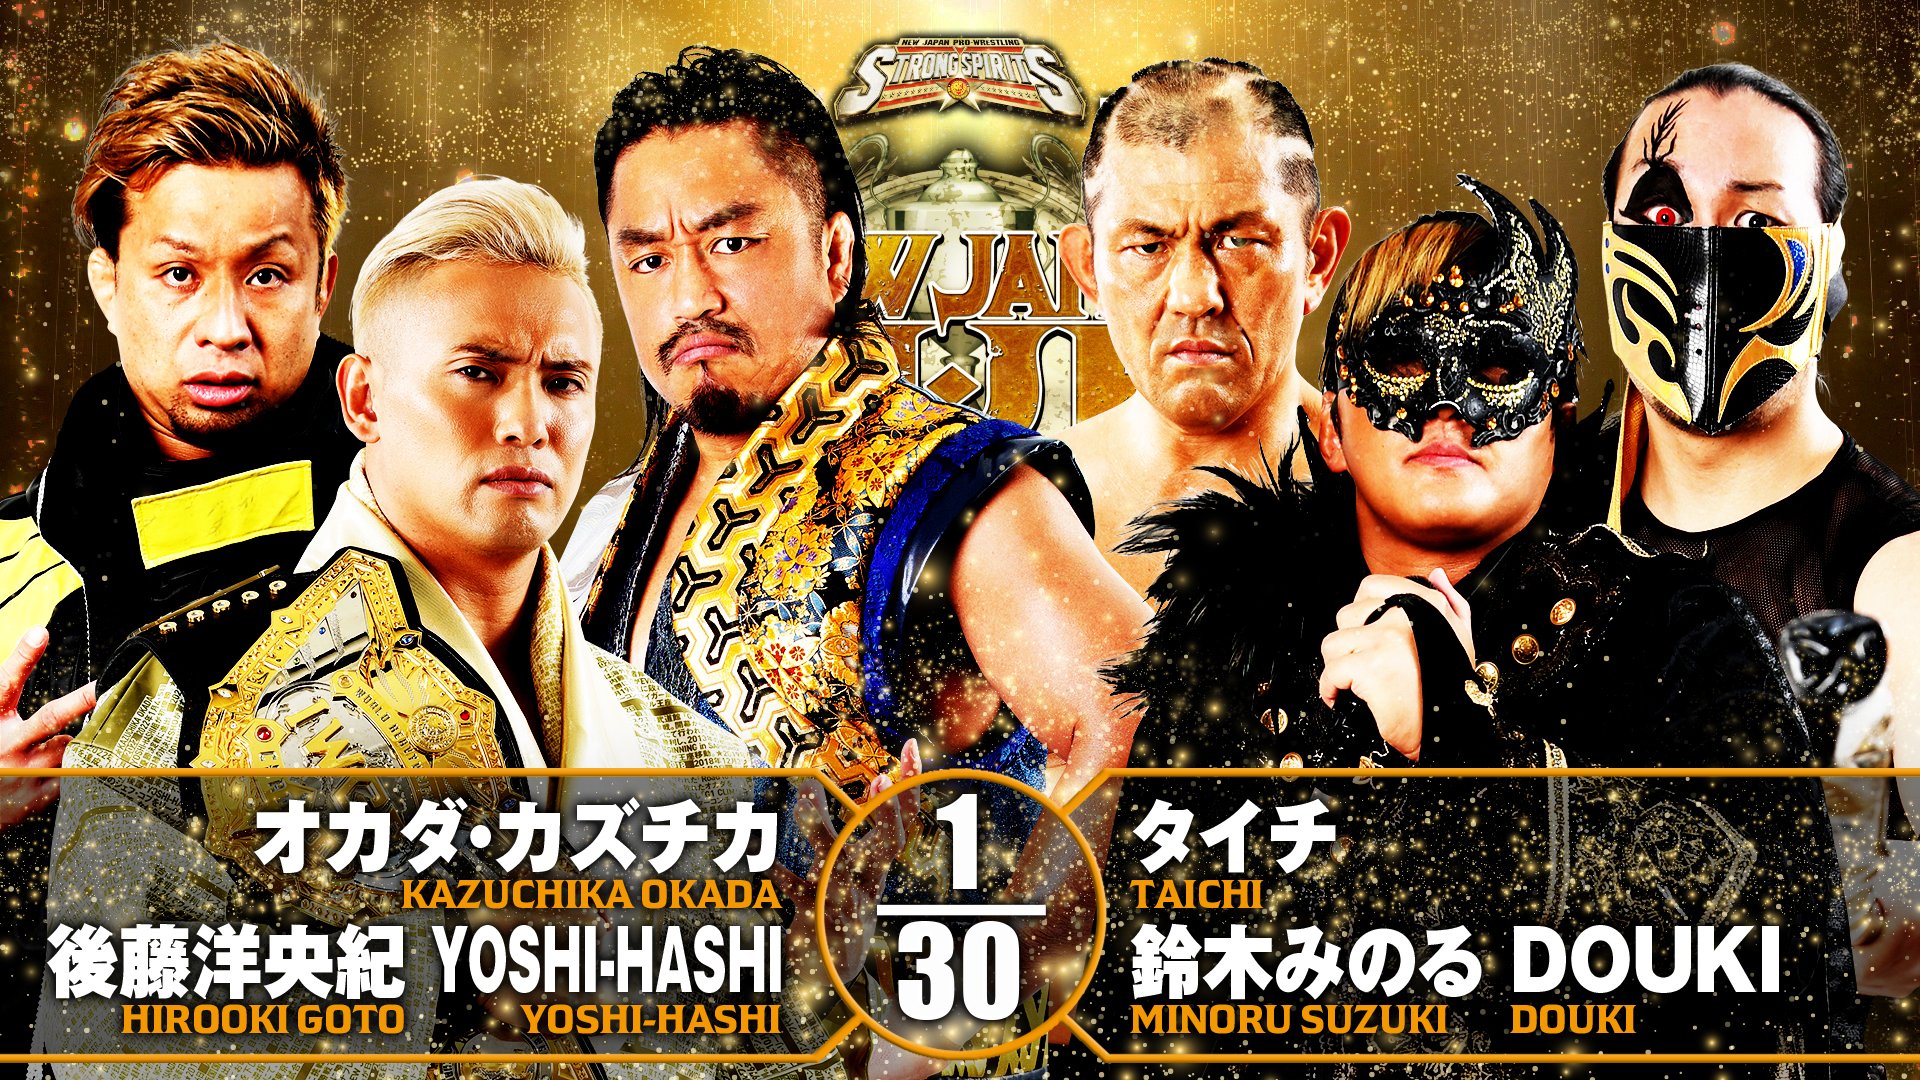 6 MAN TAG TEAM MATCH NJPW